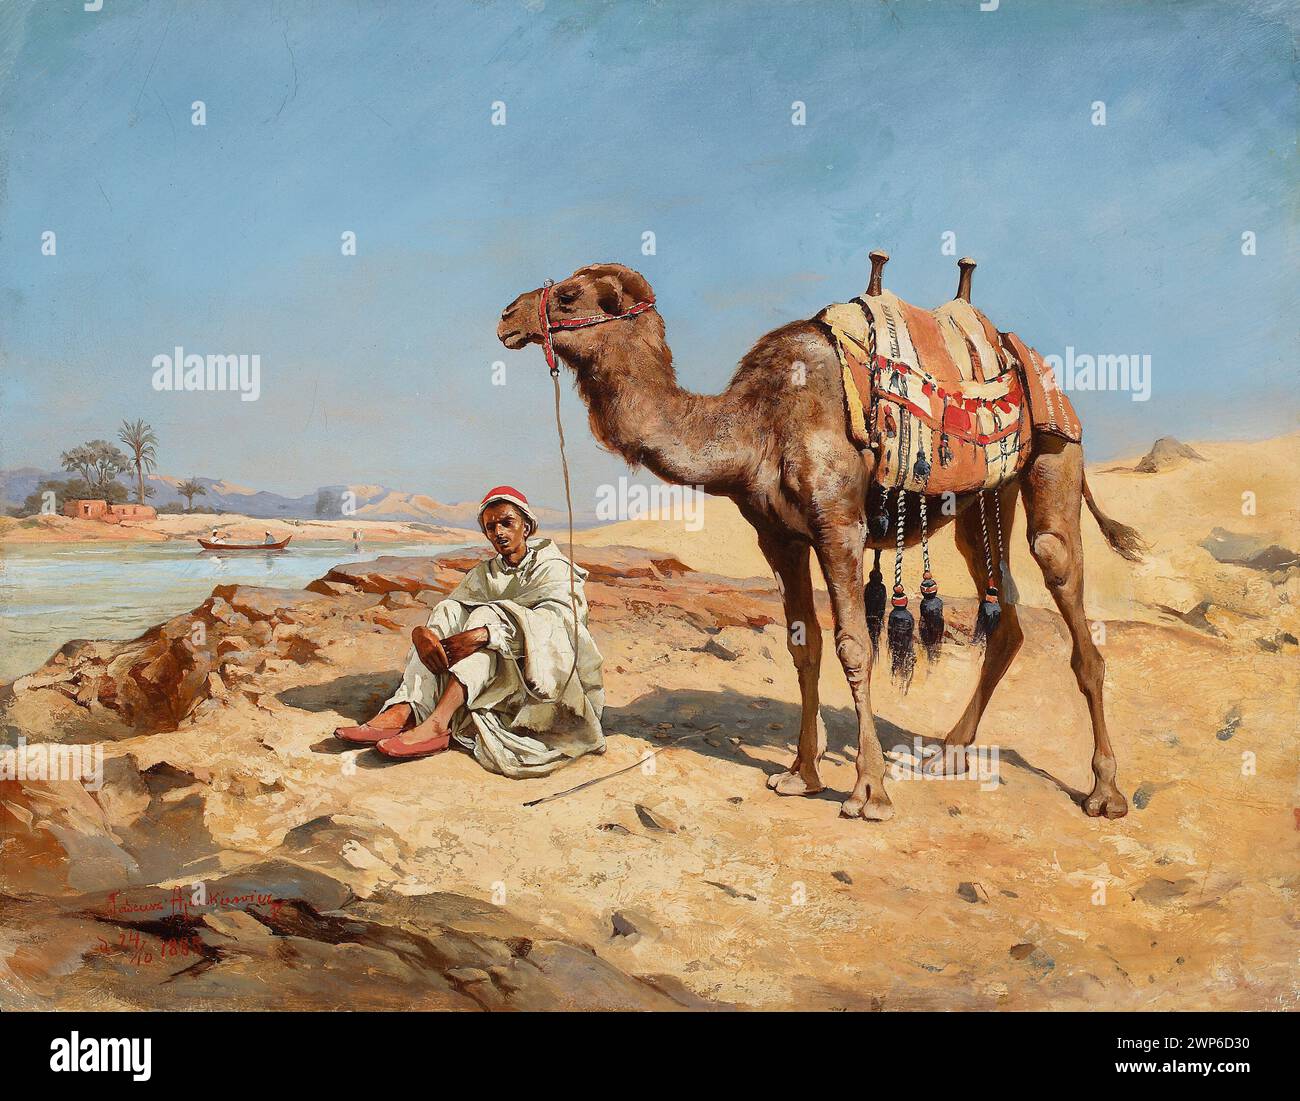 Arab in the desert; Ajdukiewicz, Tadeusz (1851-1916); 1885 (1885-00-00-1885-00-00);Arabs, orient, landscapes, message (provenance), deserts, rivers, genre scenes, harness, camels Stock Photo